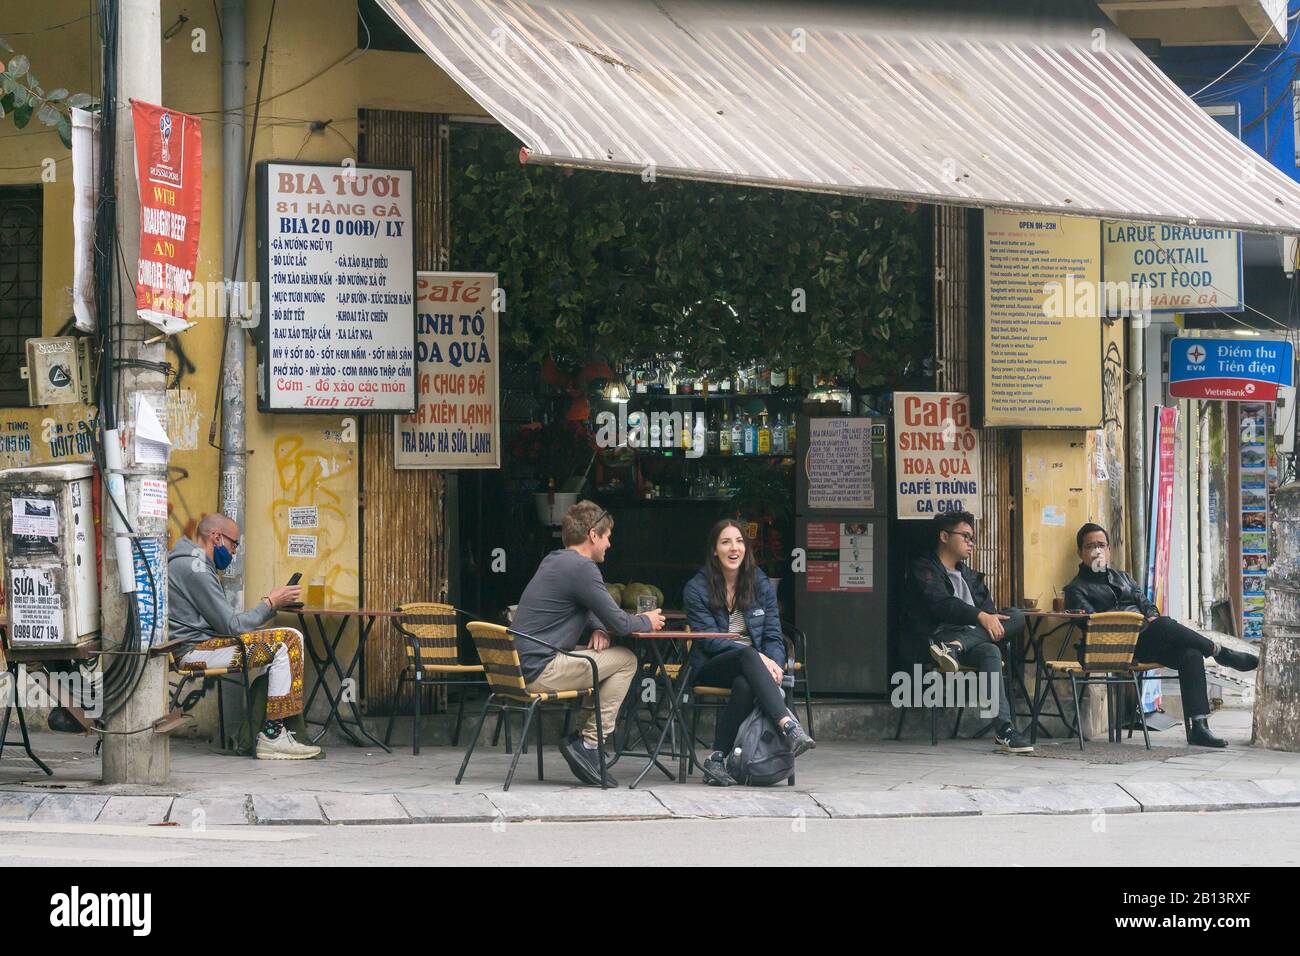 Hanoi cafe - Exterior of a cafe on Hang Ga street in Hanoi, Vietnam, Southeast Asia. Stock Photo